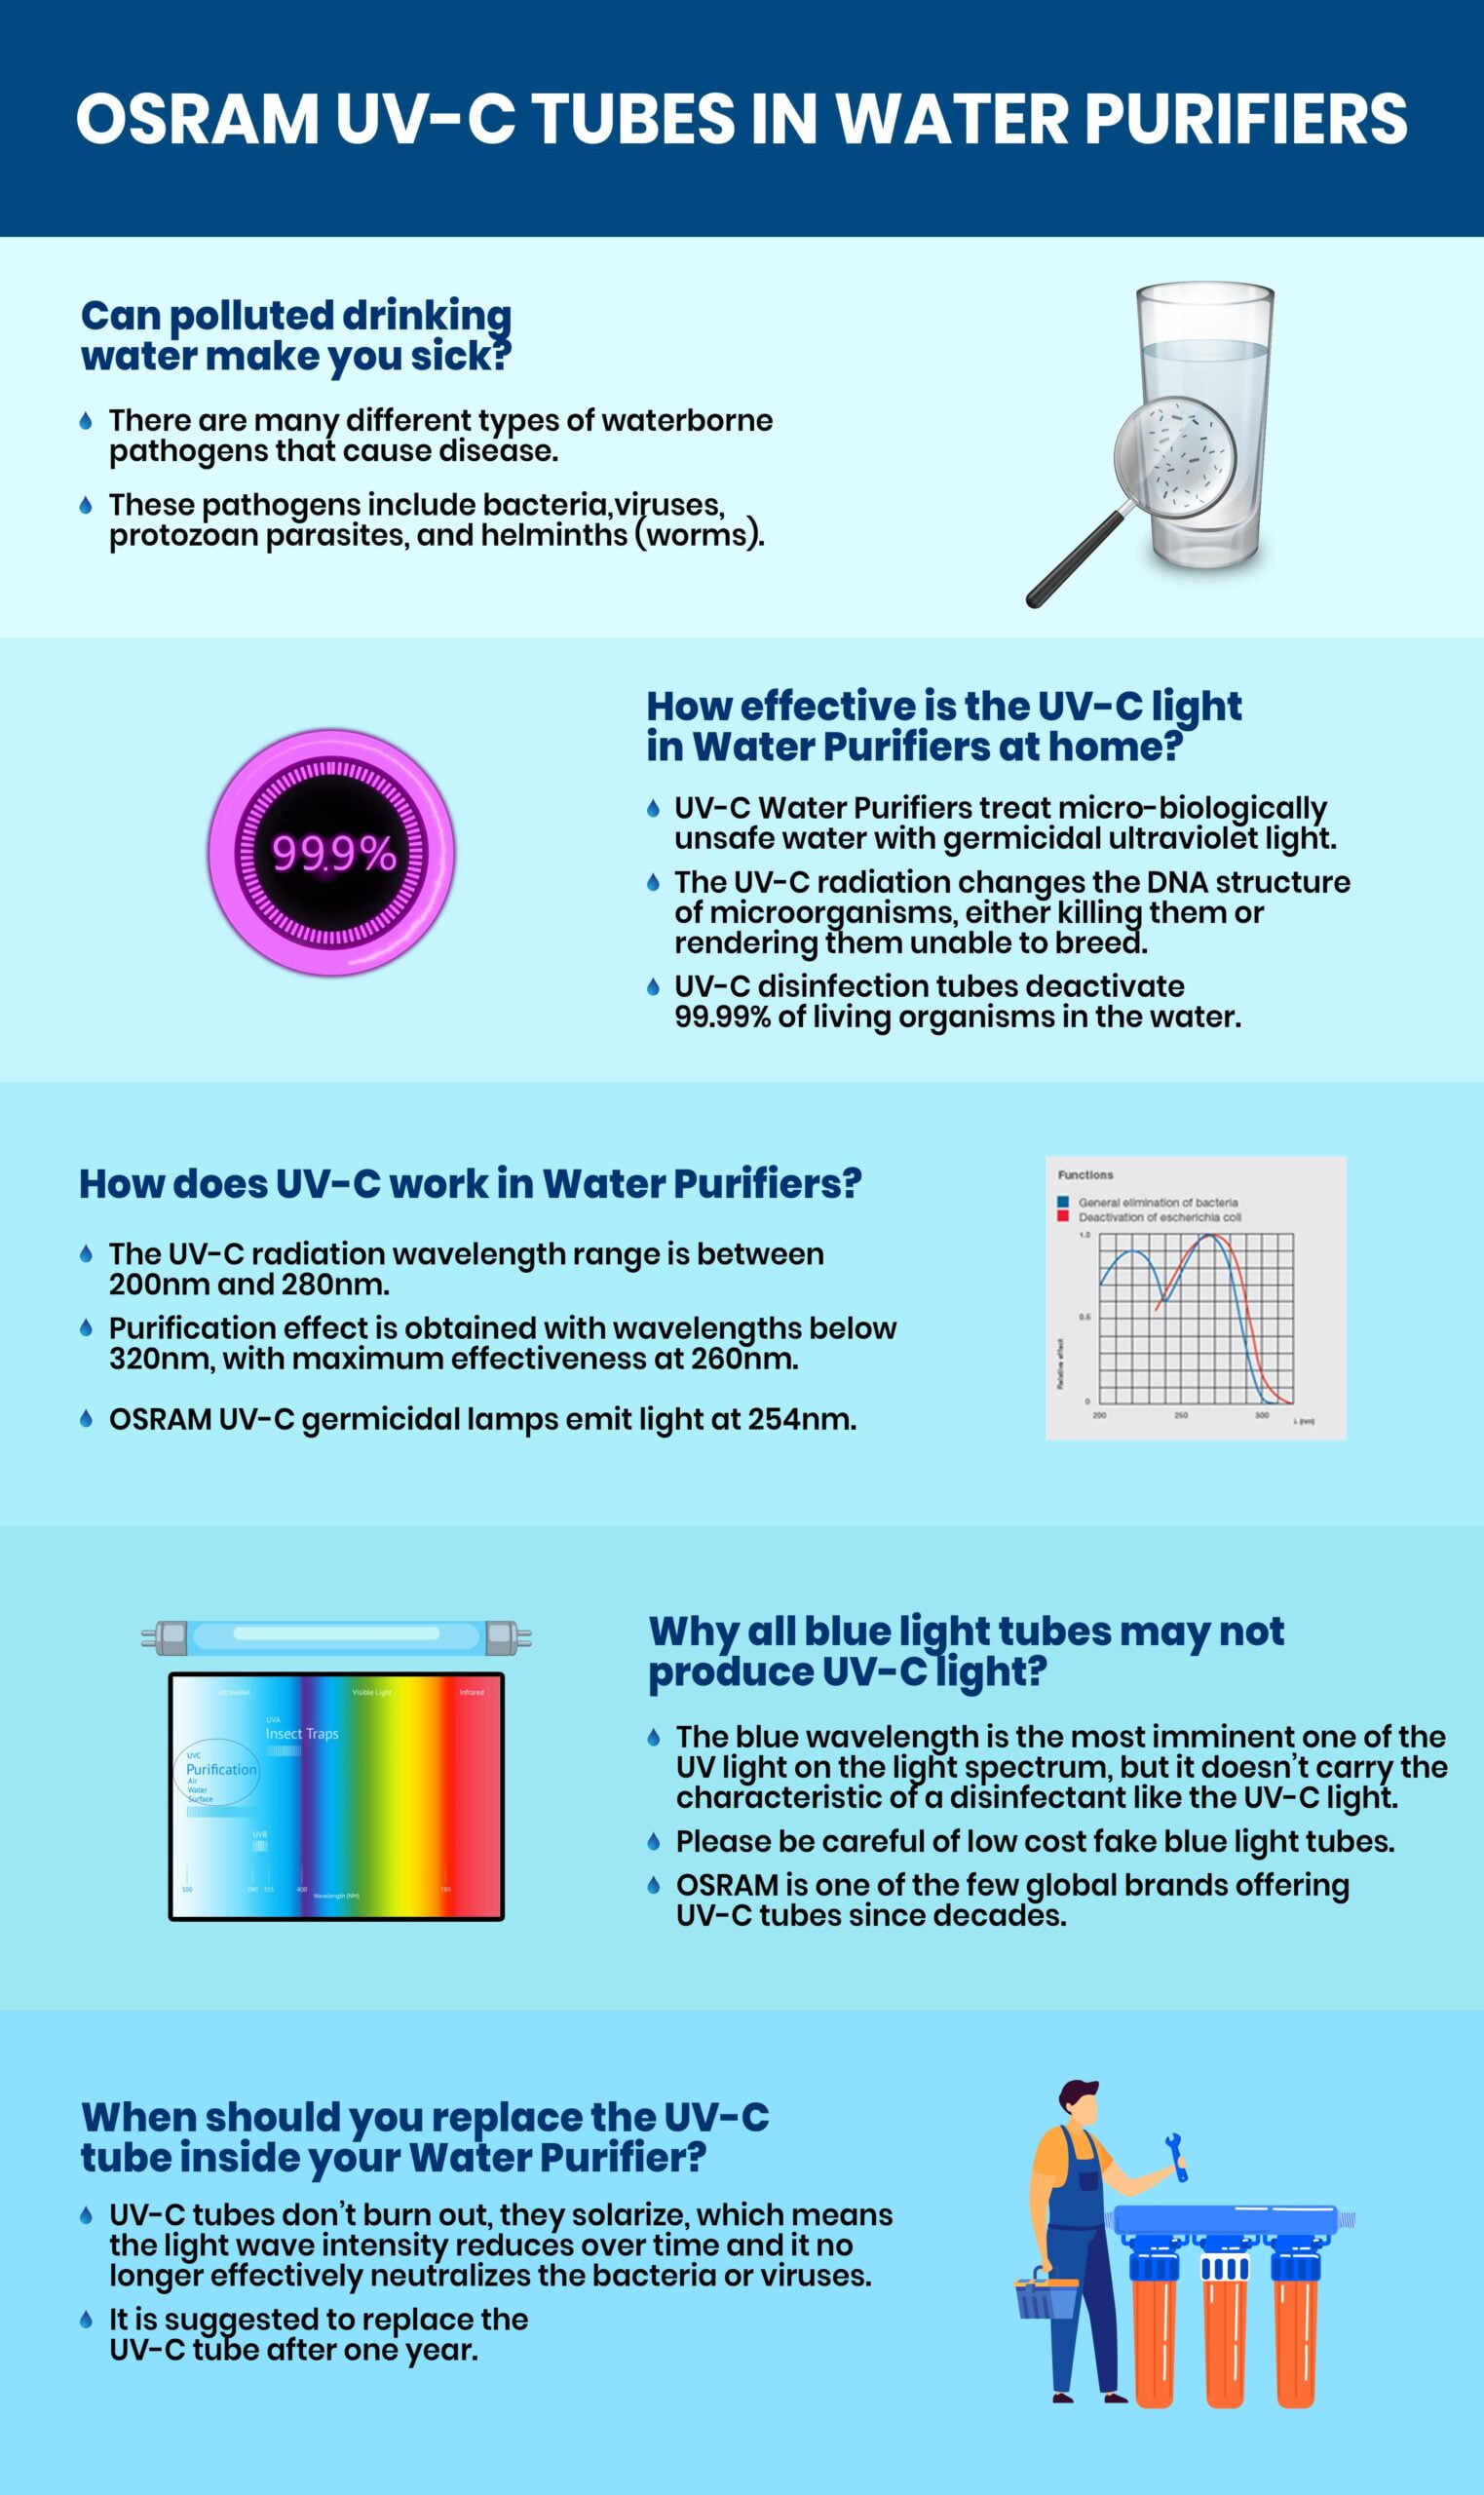 OSRAM UV-C TUBES IN WATER PURIFIERS